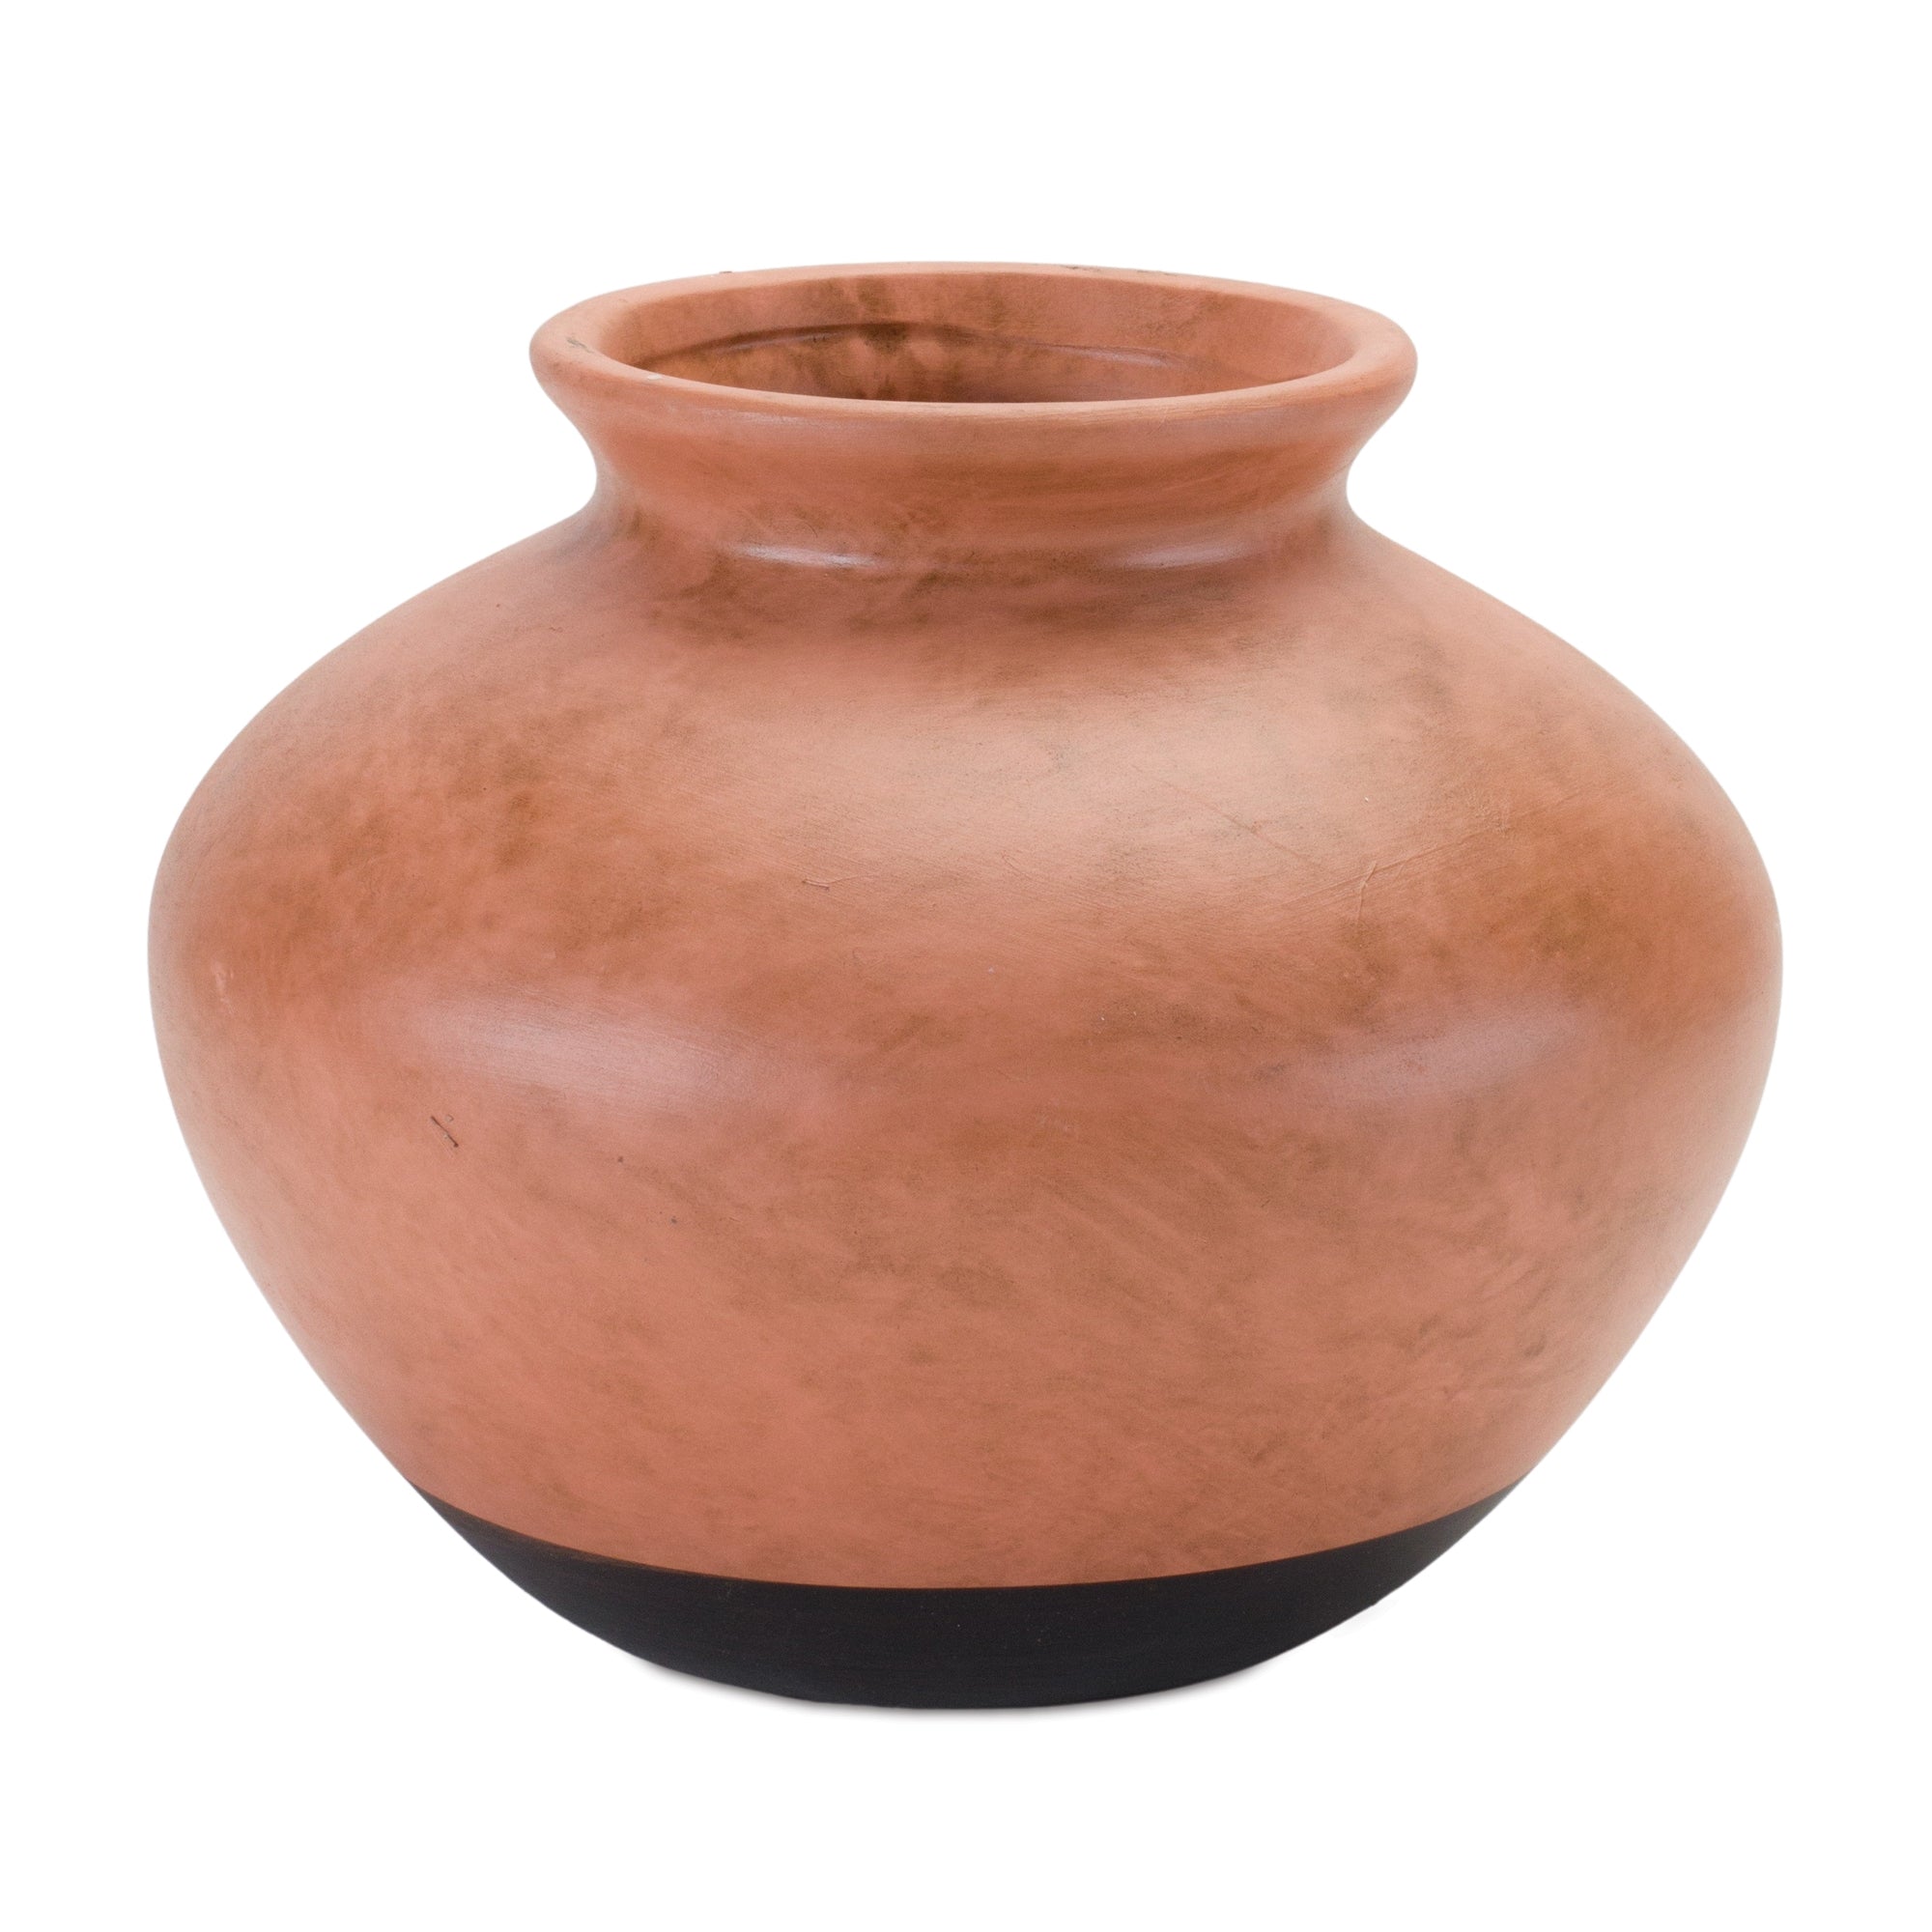 Two Tone Ceramic Vase 9" - Vases